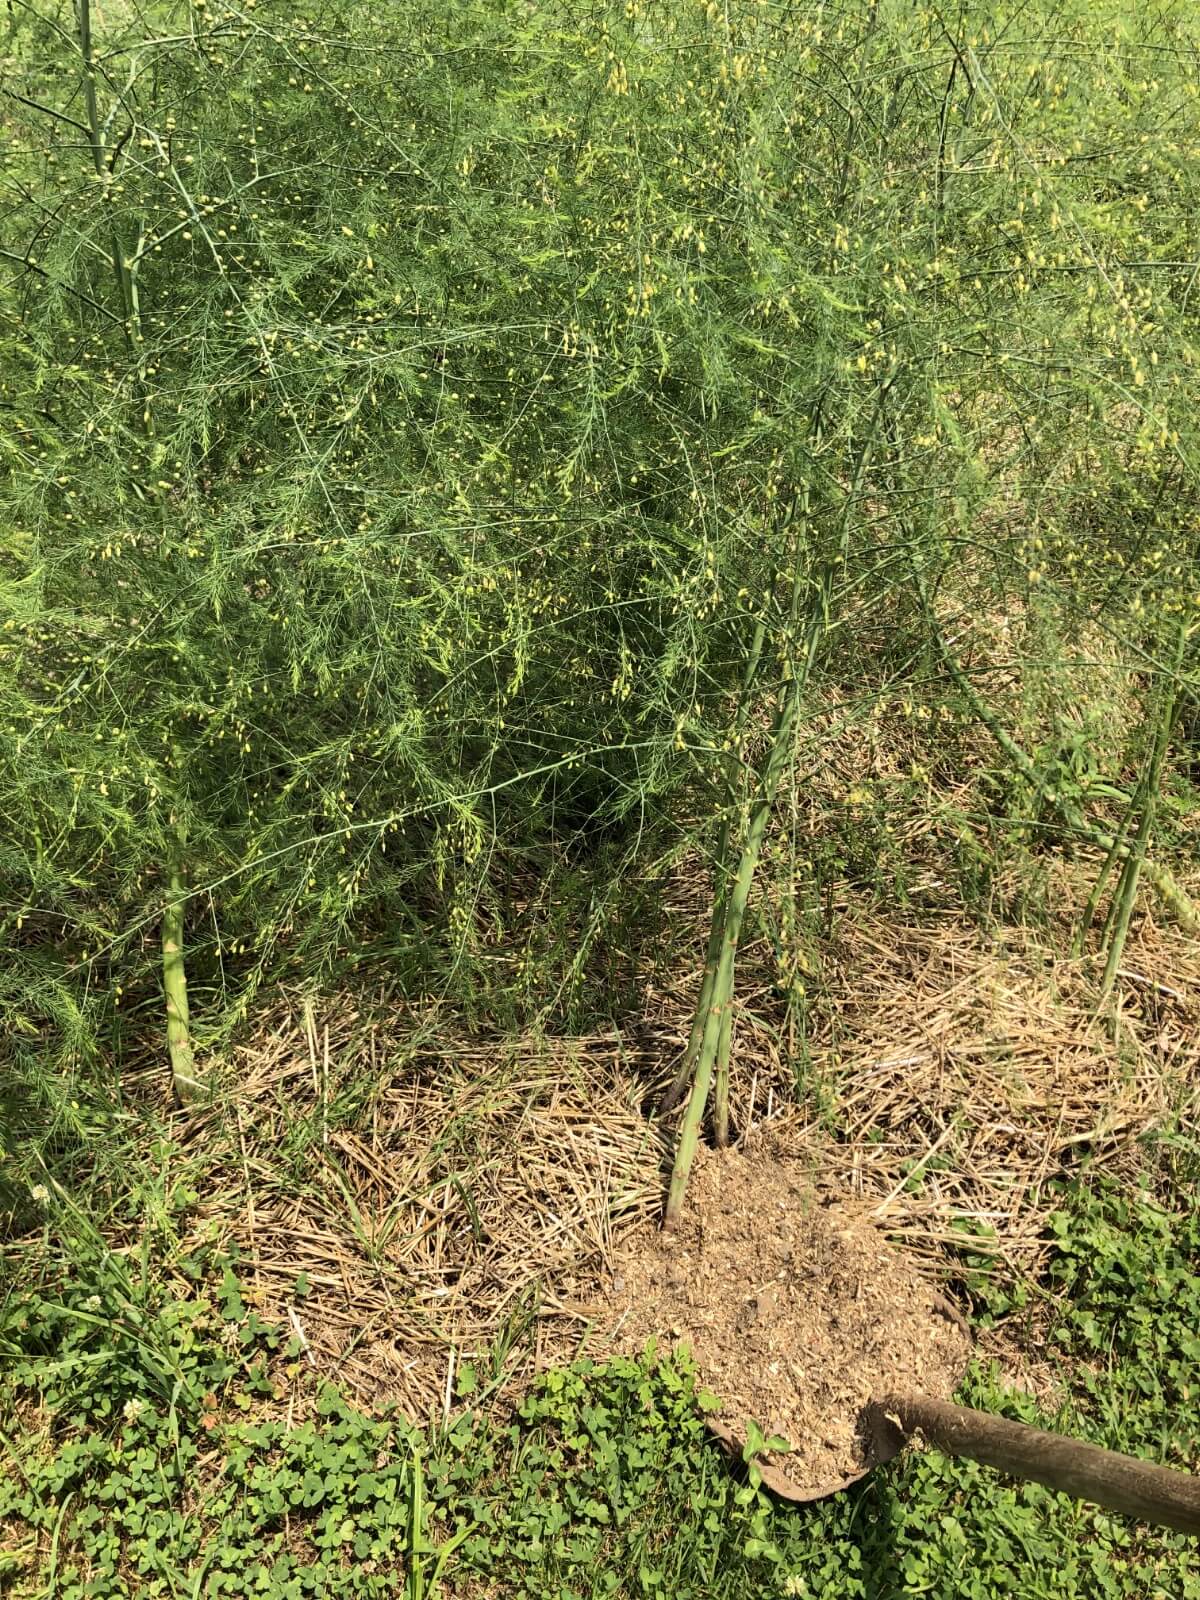 Asparagus fertilized with chicken manure